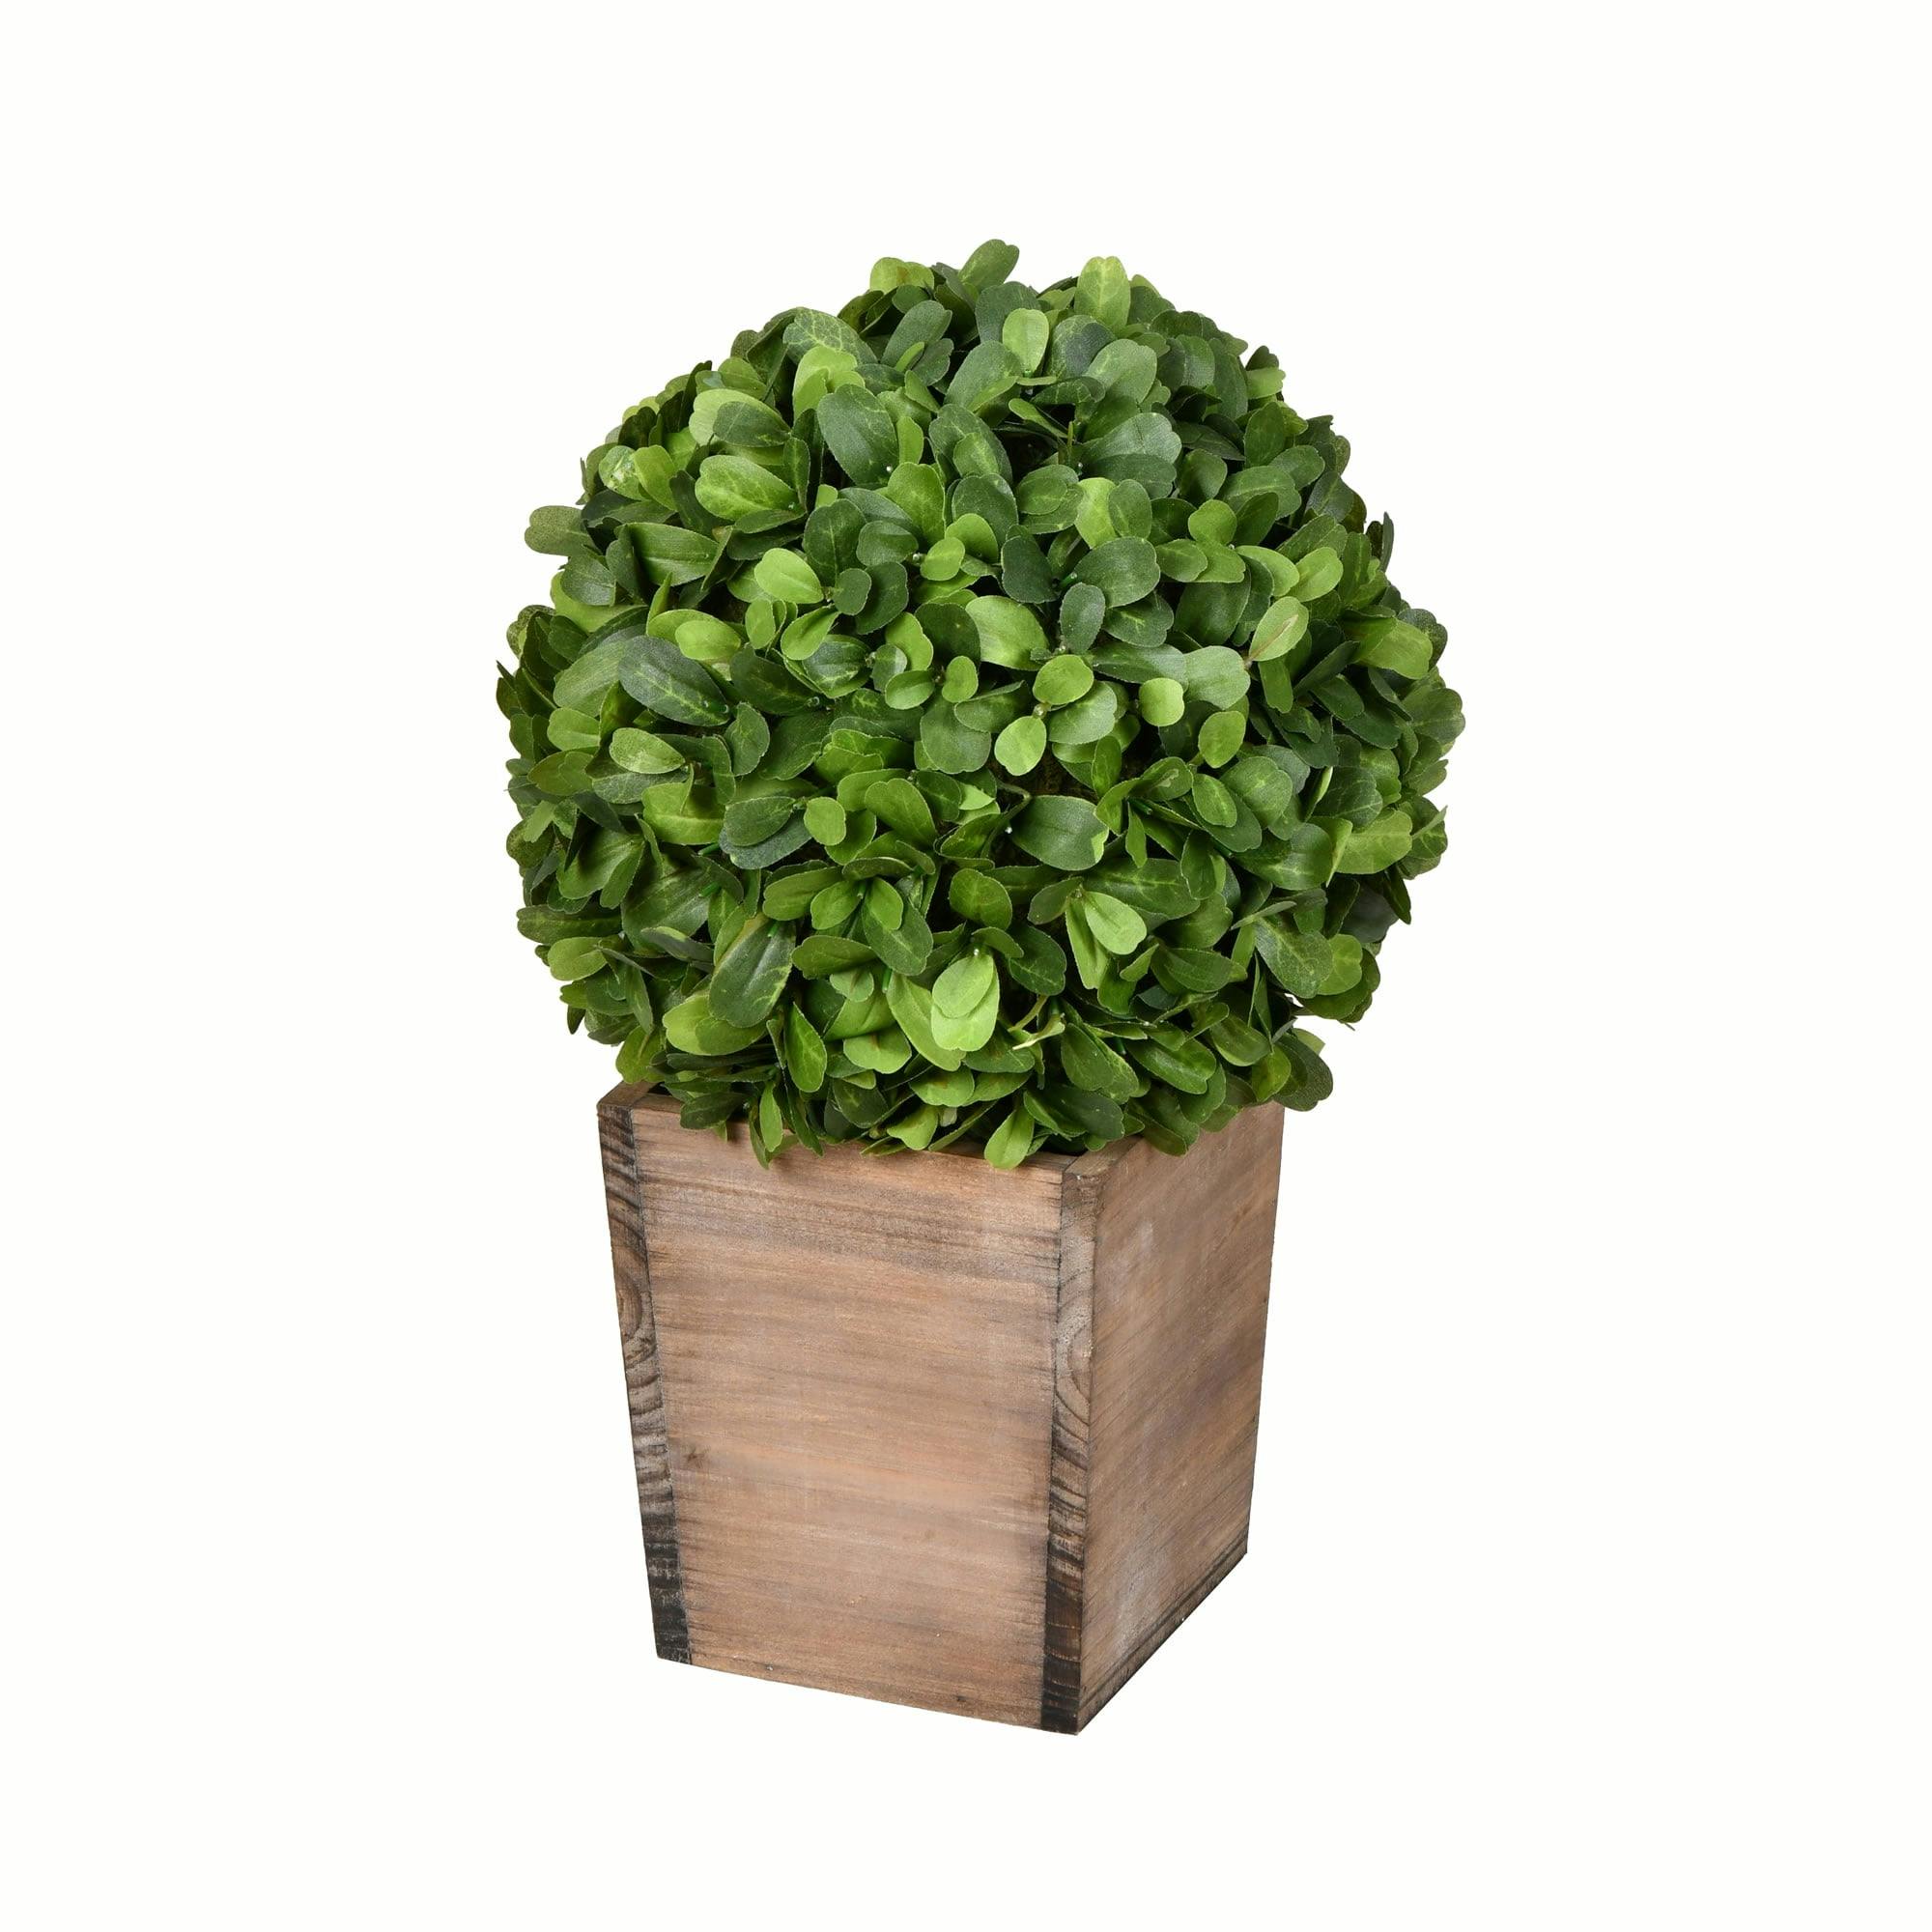 Elegant 16" Green Boxwood Topiary in Decorative Wooden Pot